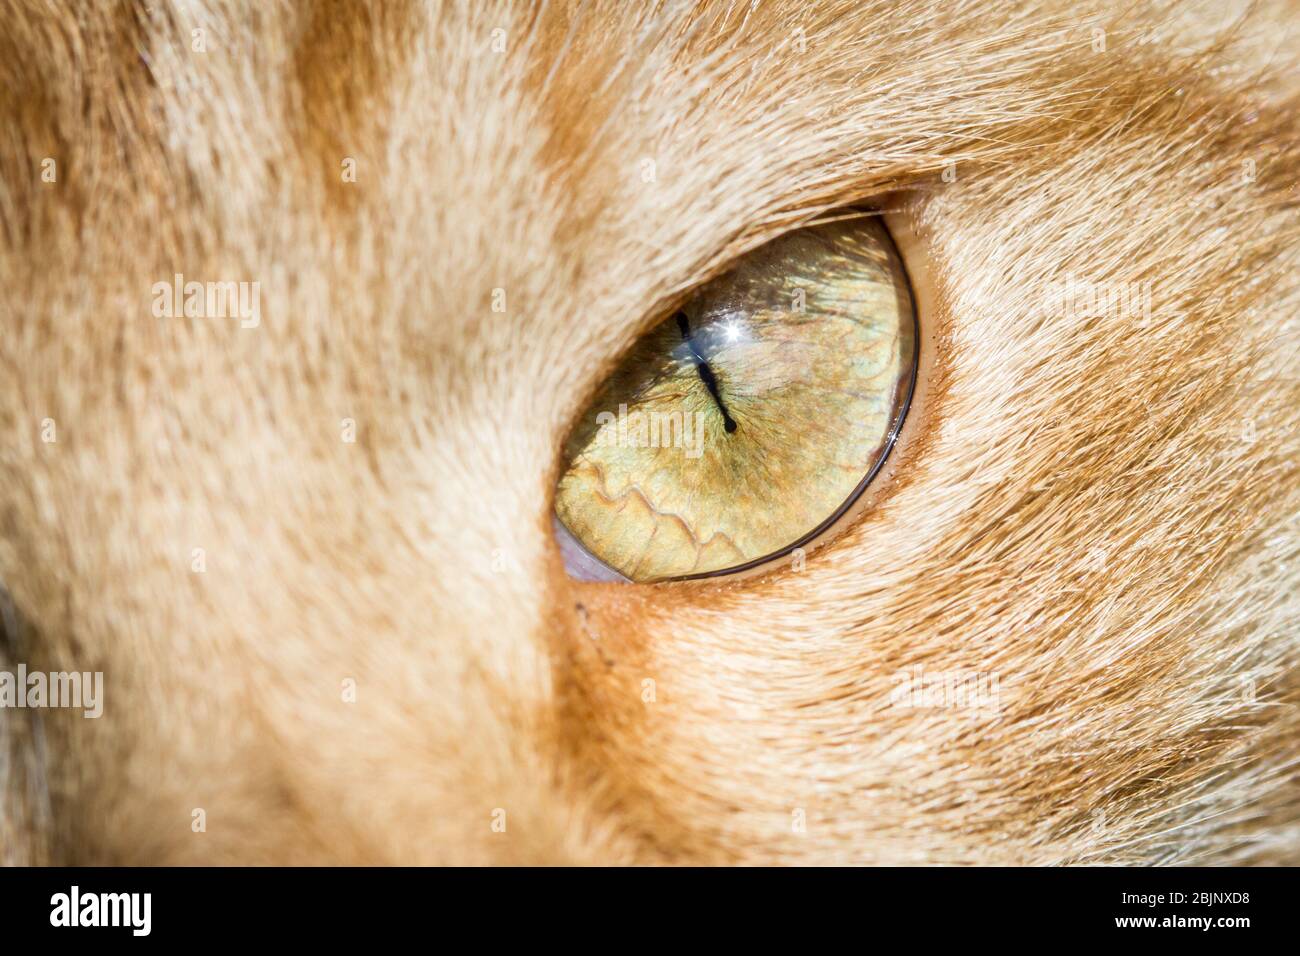 Macro photography of a cat's eye Stock Photo